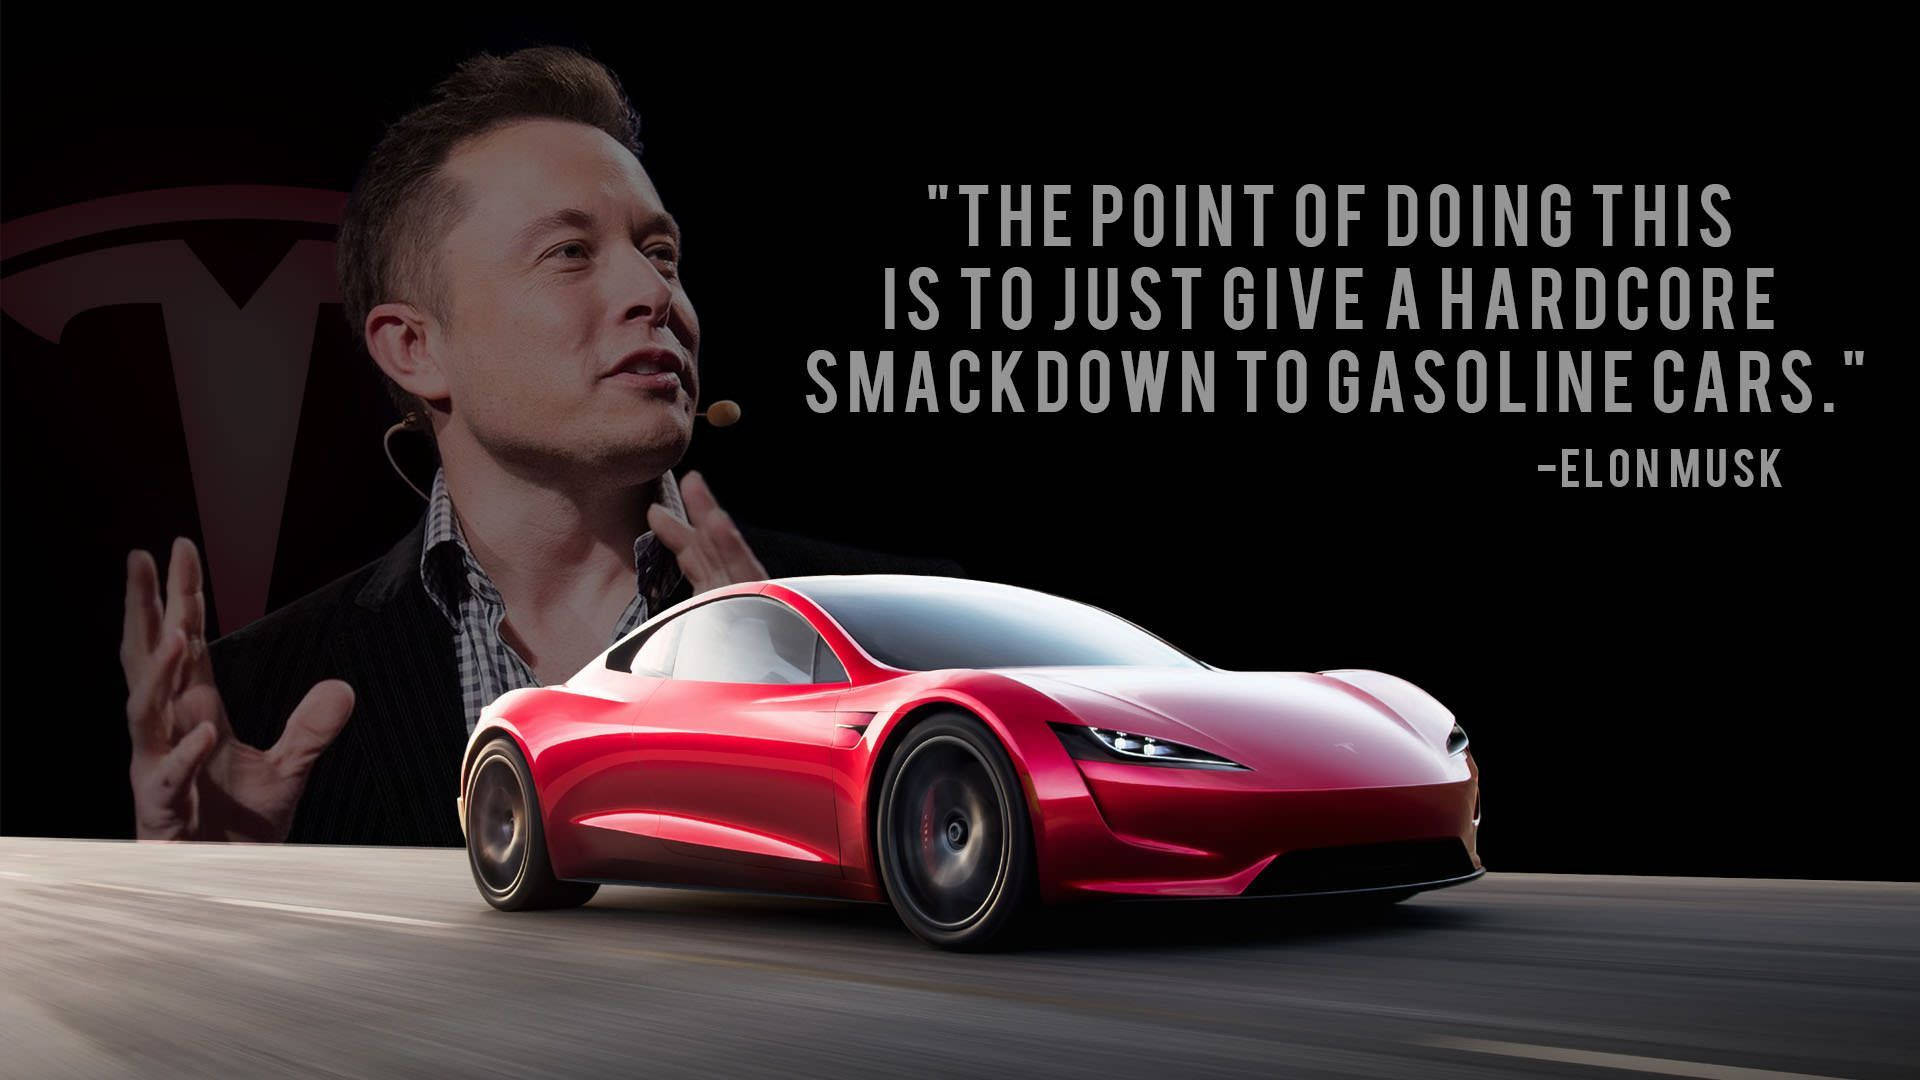 Free Elon Musk Wallpaper Downloads, [100+] Elon Musk Wallpapers for FREE |  